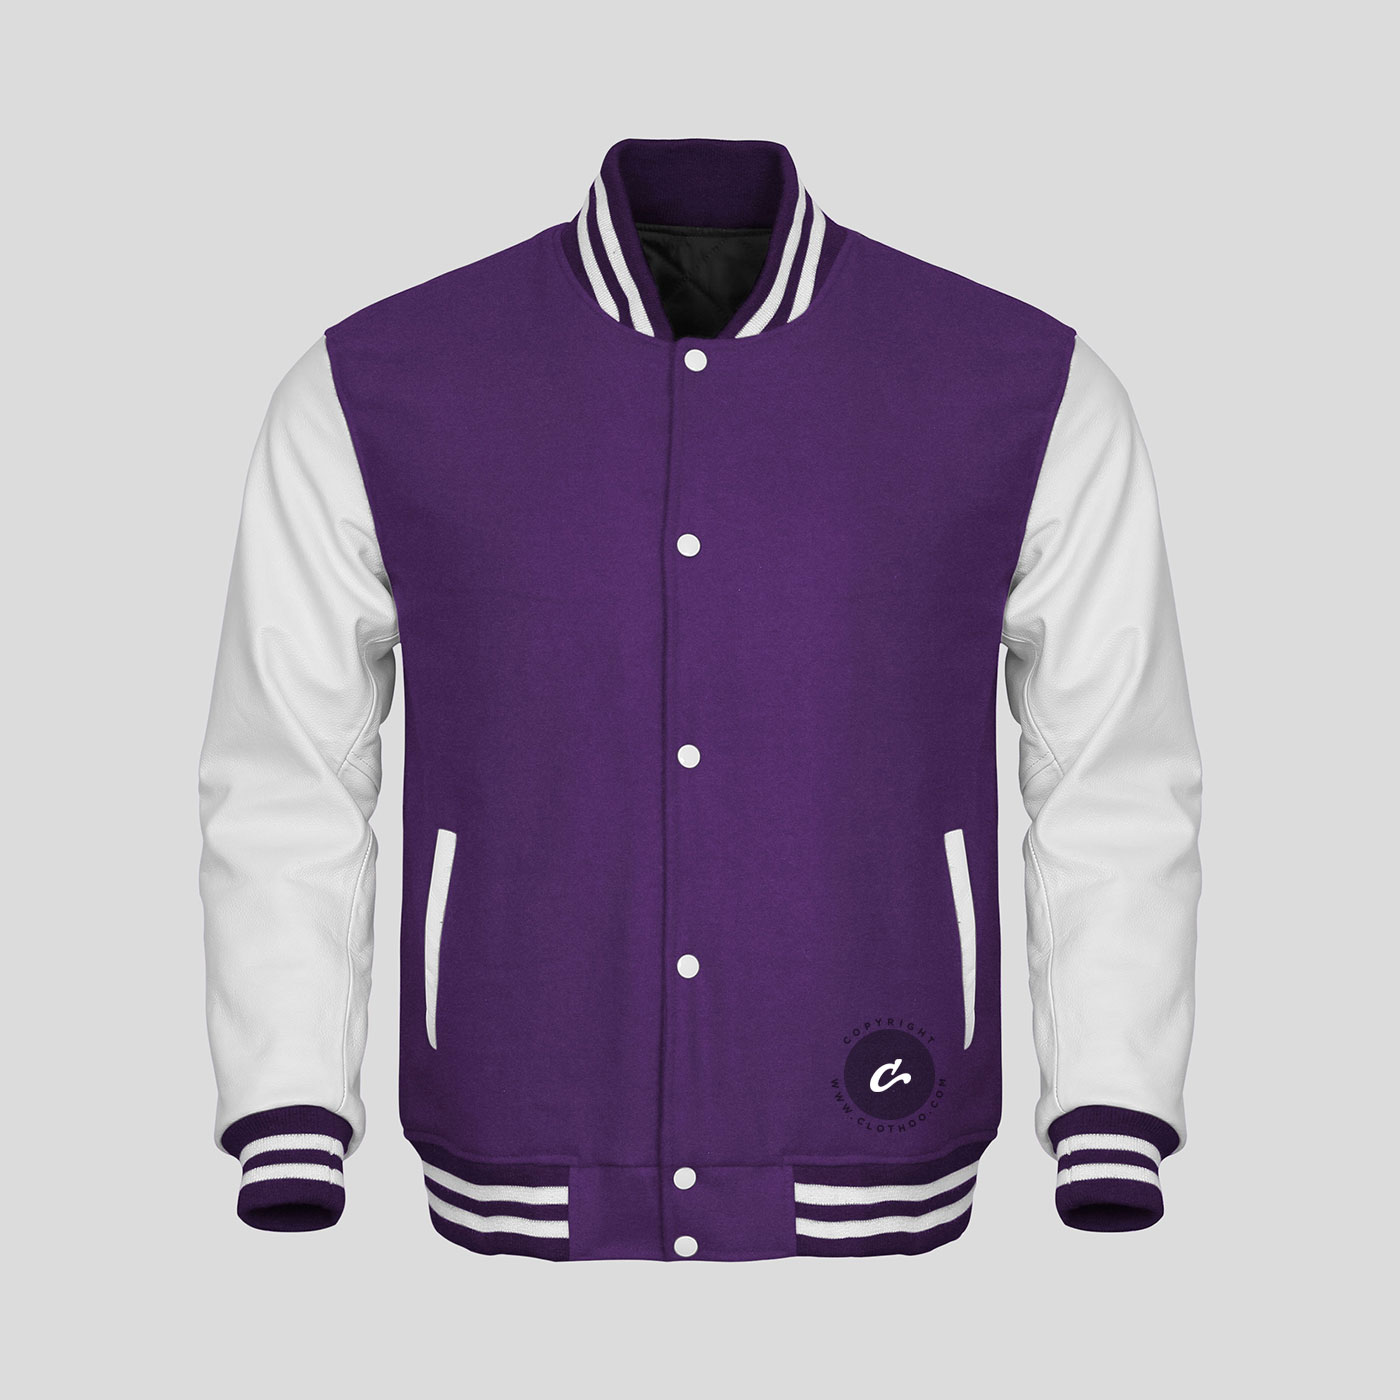 Новые бомберы. Леттерман Джекет бомбер. Purple Varsity Jacket. School джакет. Бейсбольная куртка фиолетовая.